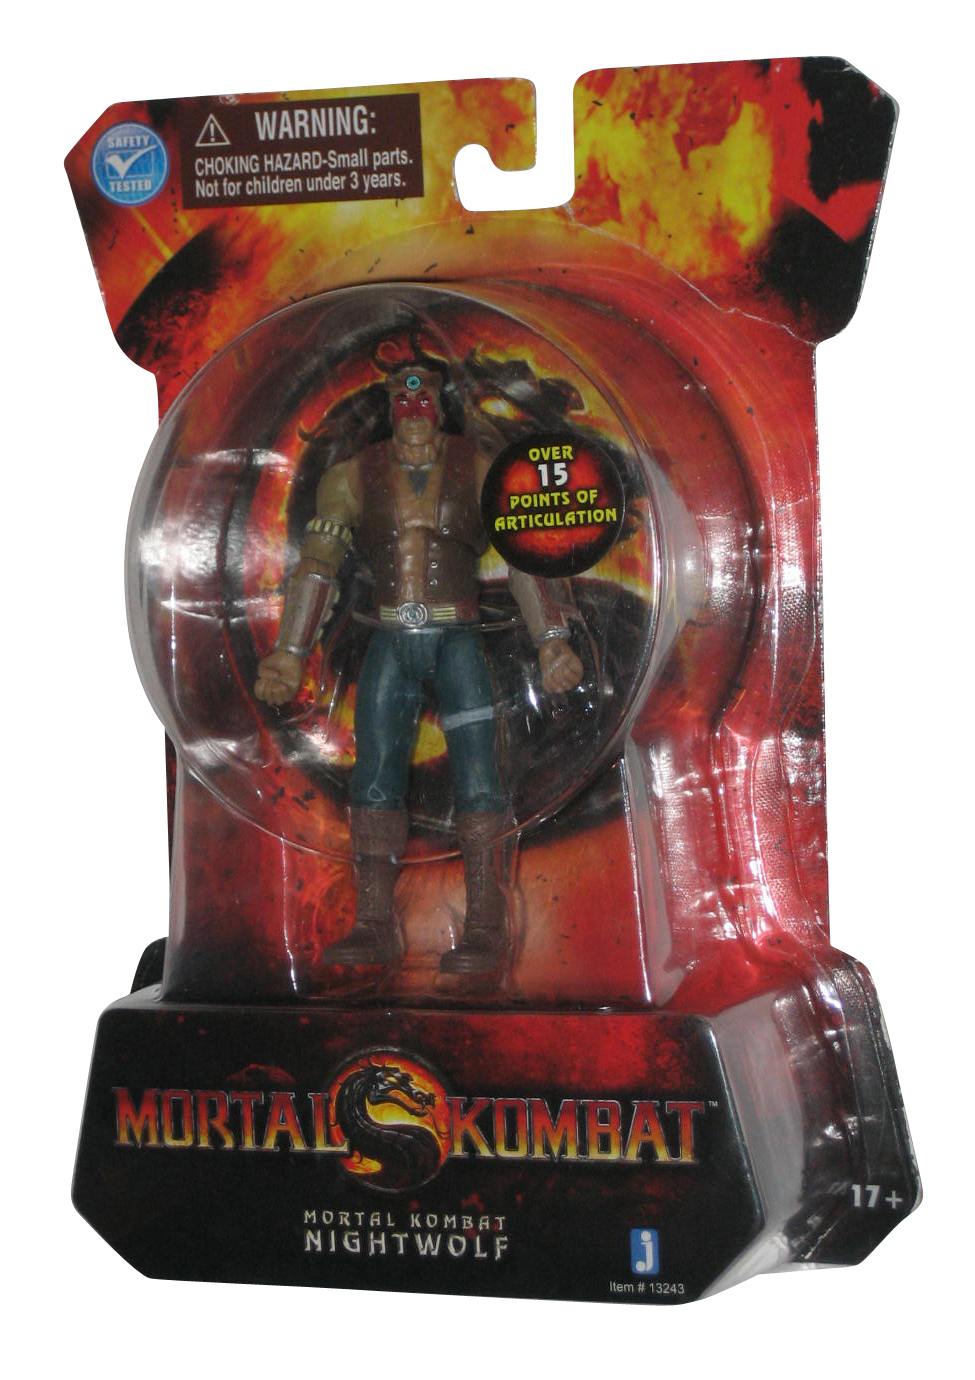 mortal kombat nightwolf action figure